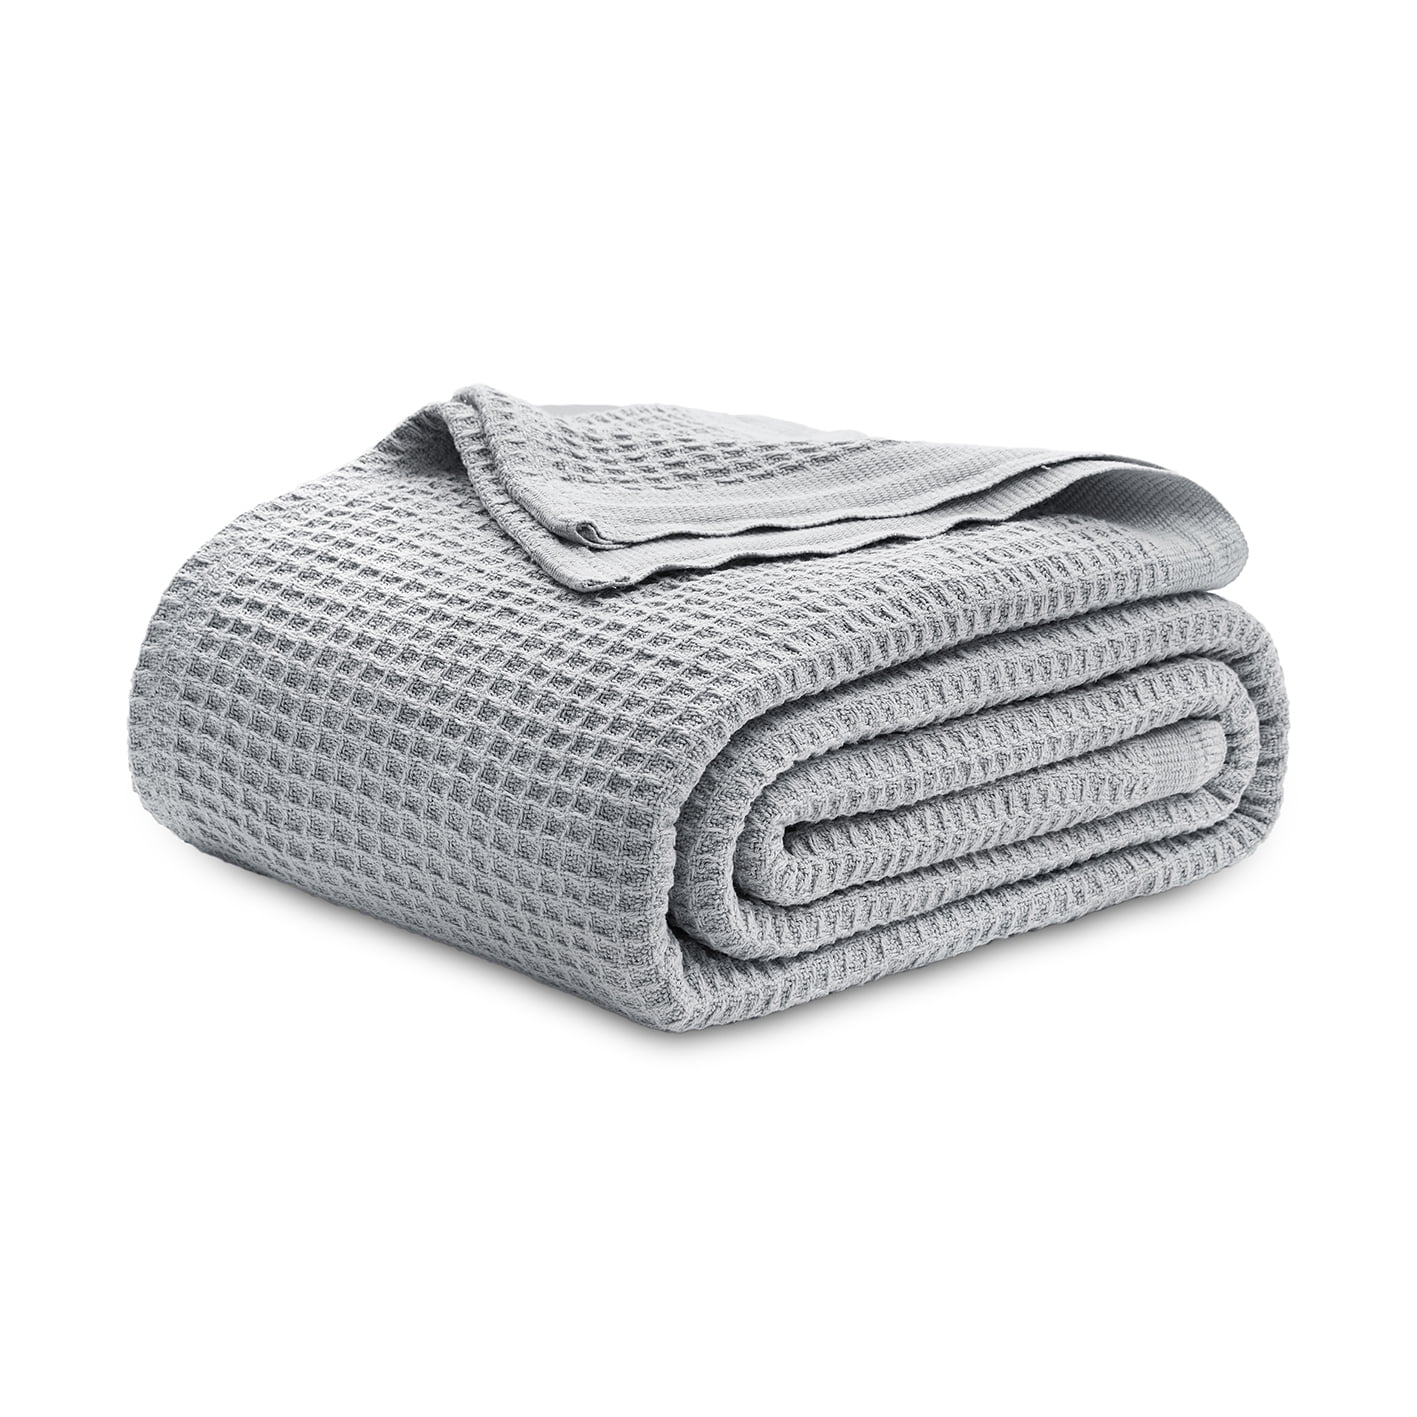 Bedsure 100% Cotton Blankets Queen Grey - Waffle Weave